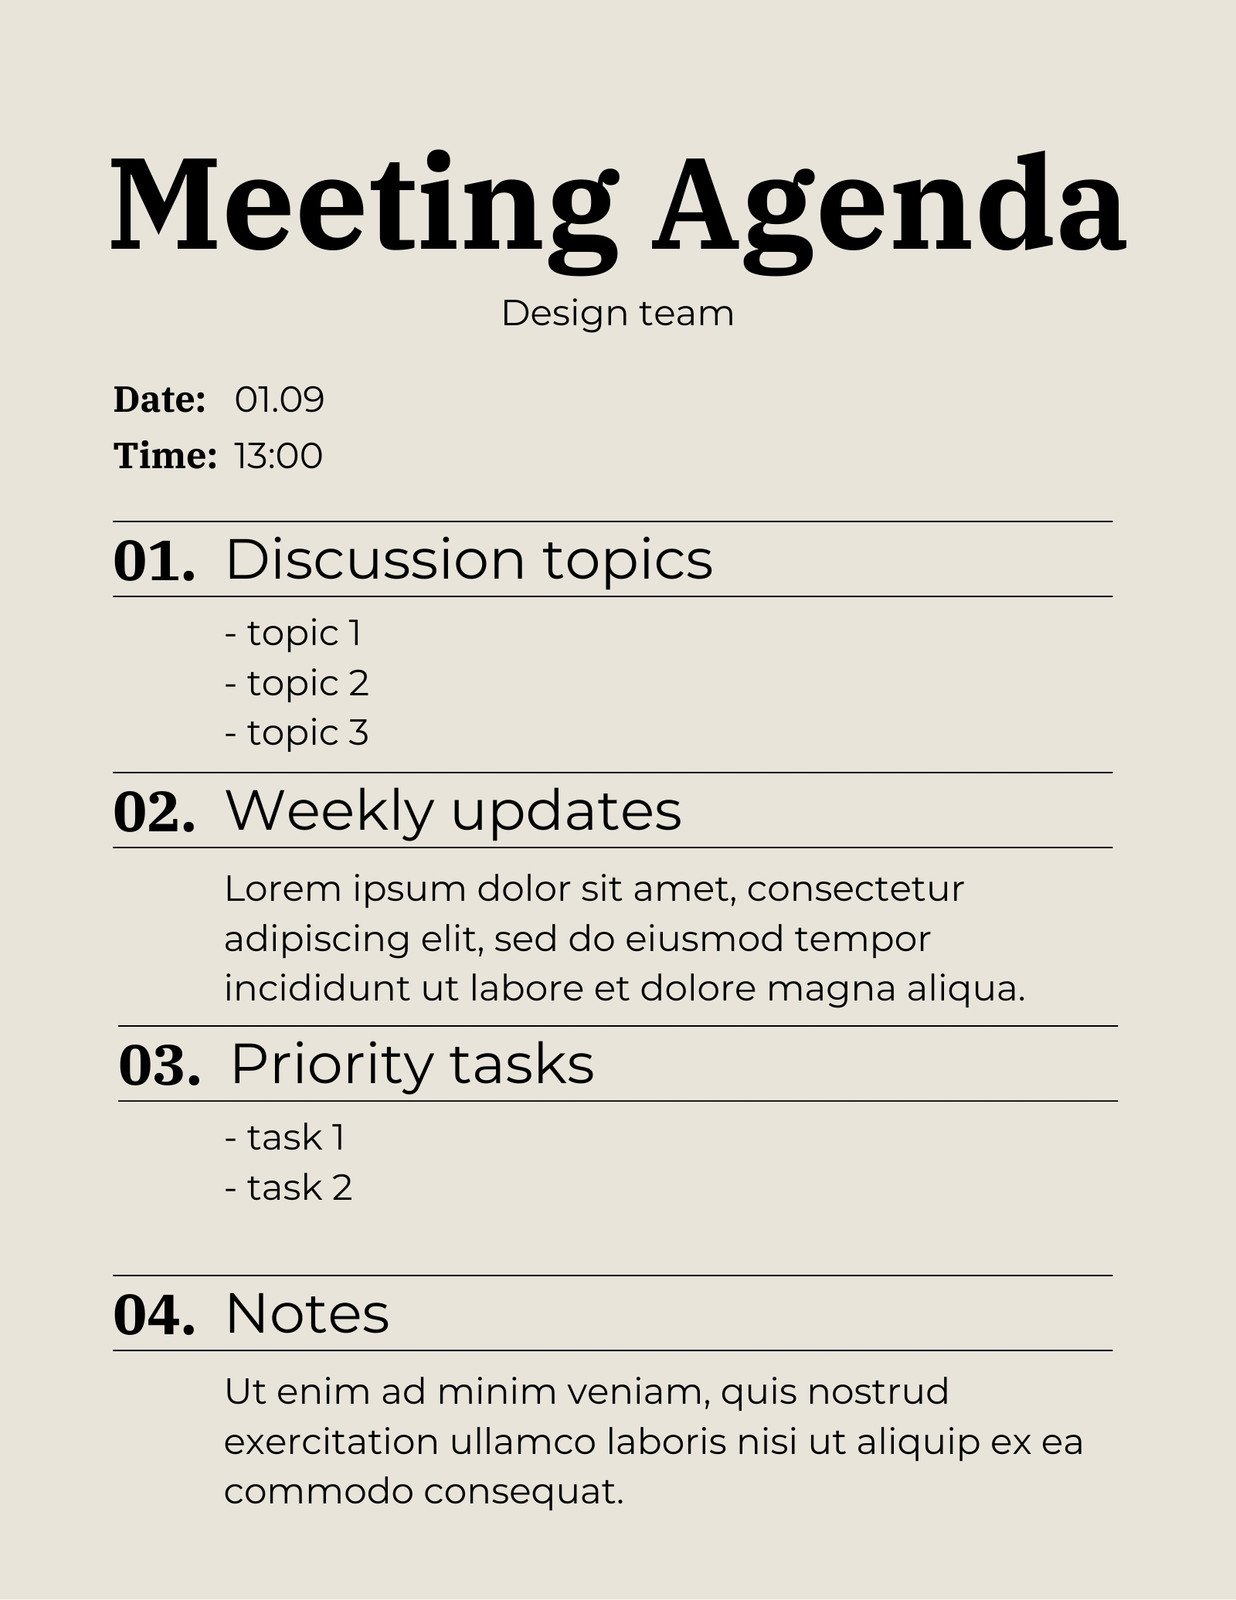 Meeting Agenda - Template